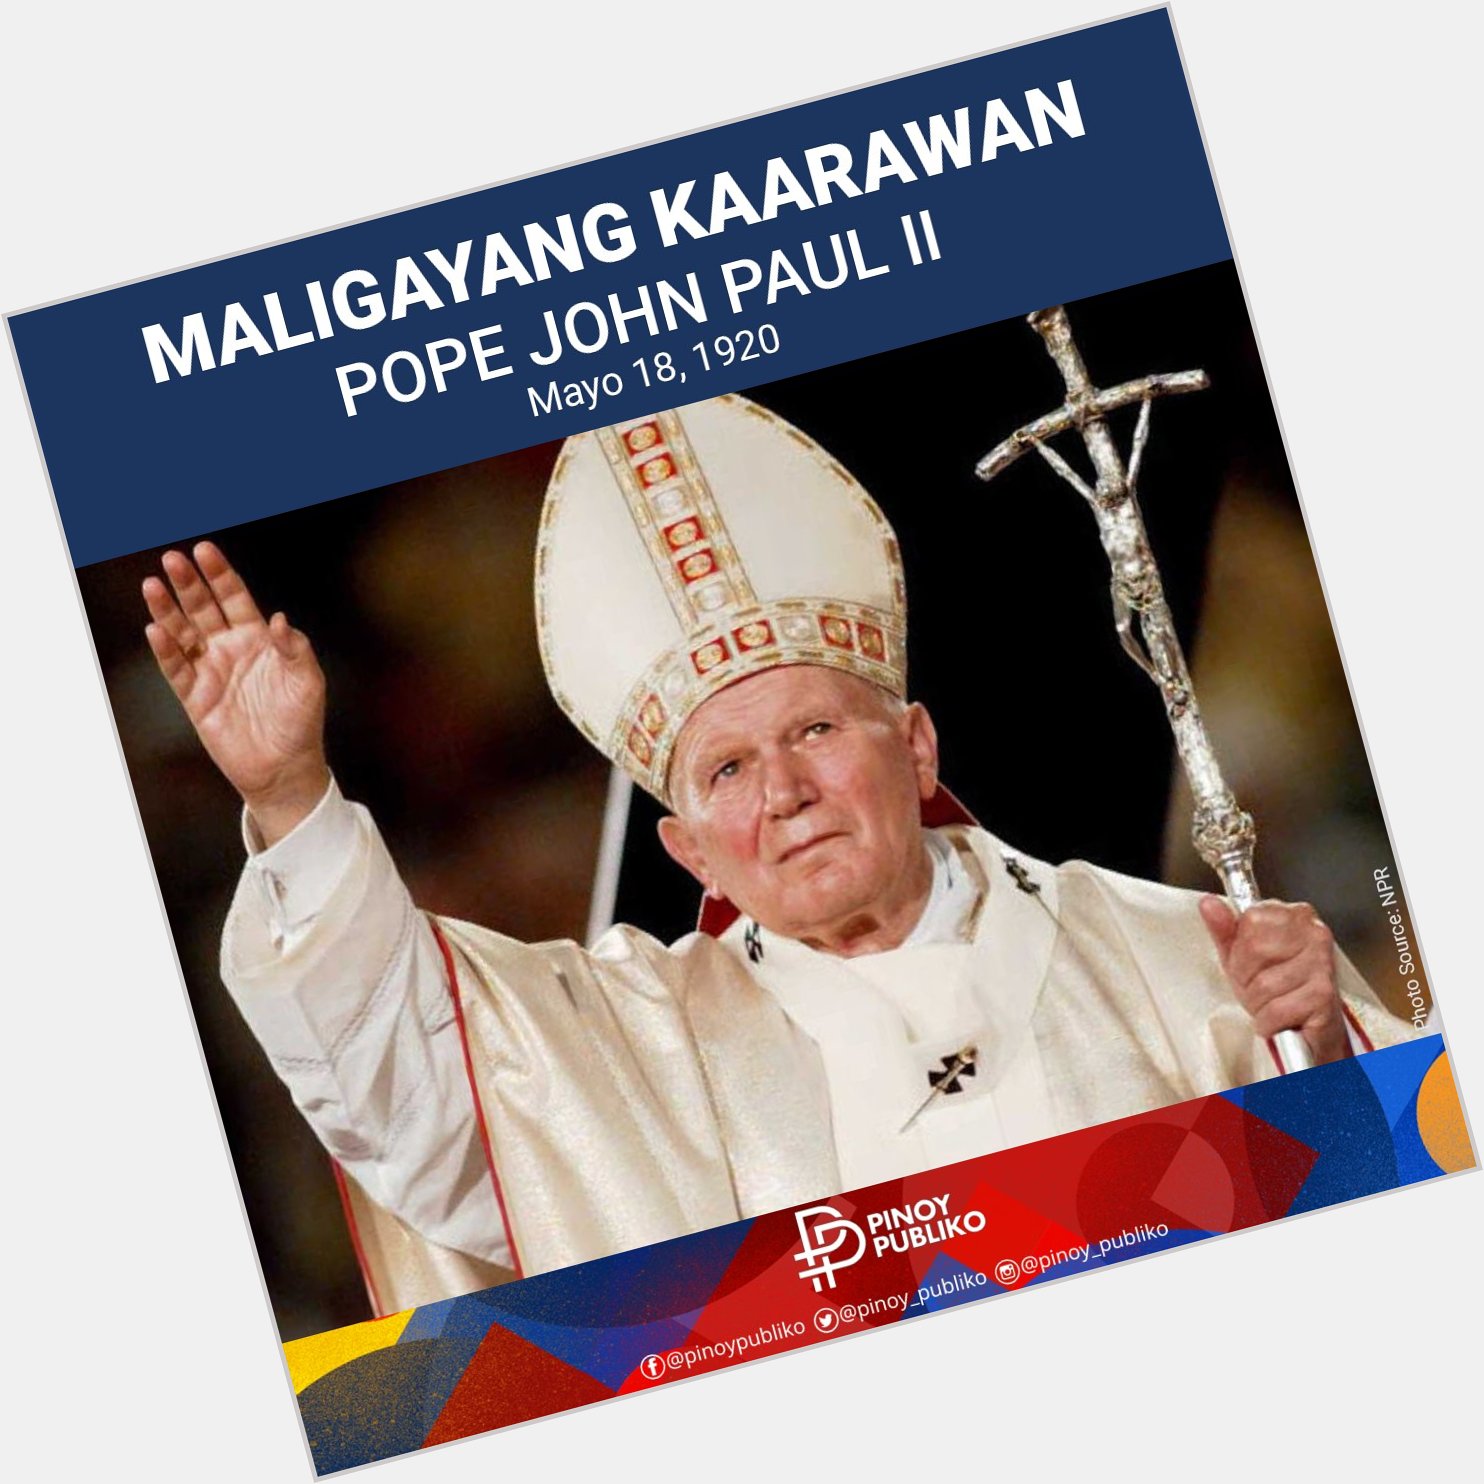 Happy birthday to his holiness

Pope John Paul II 